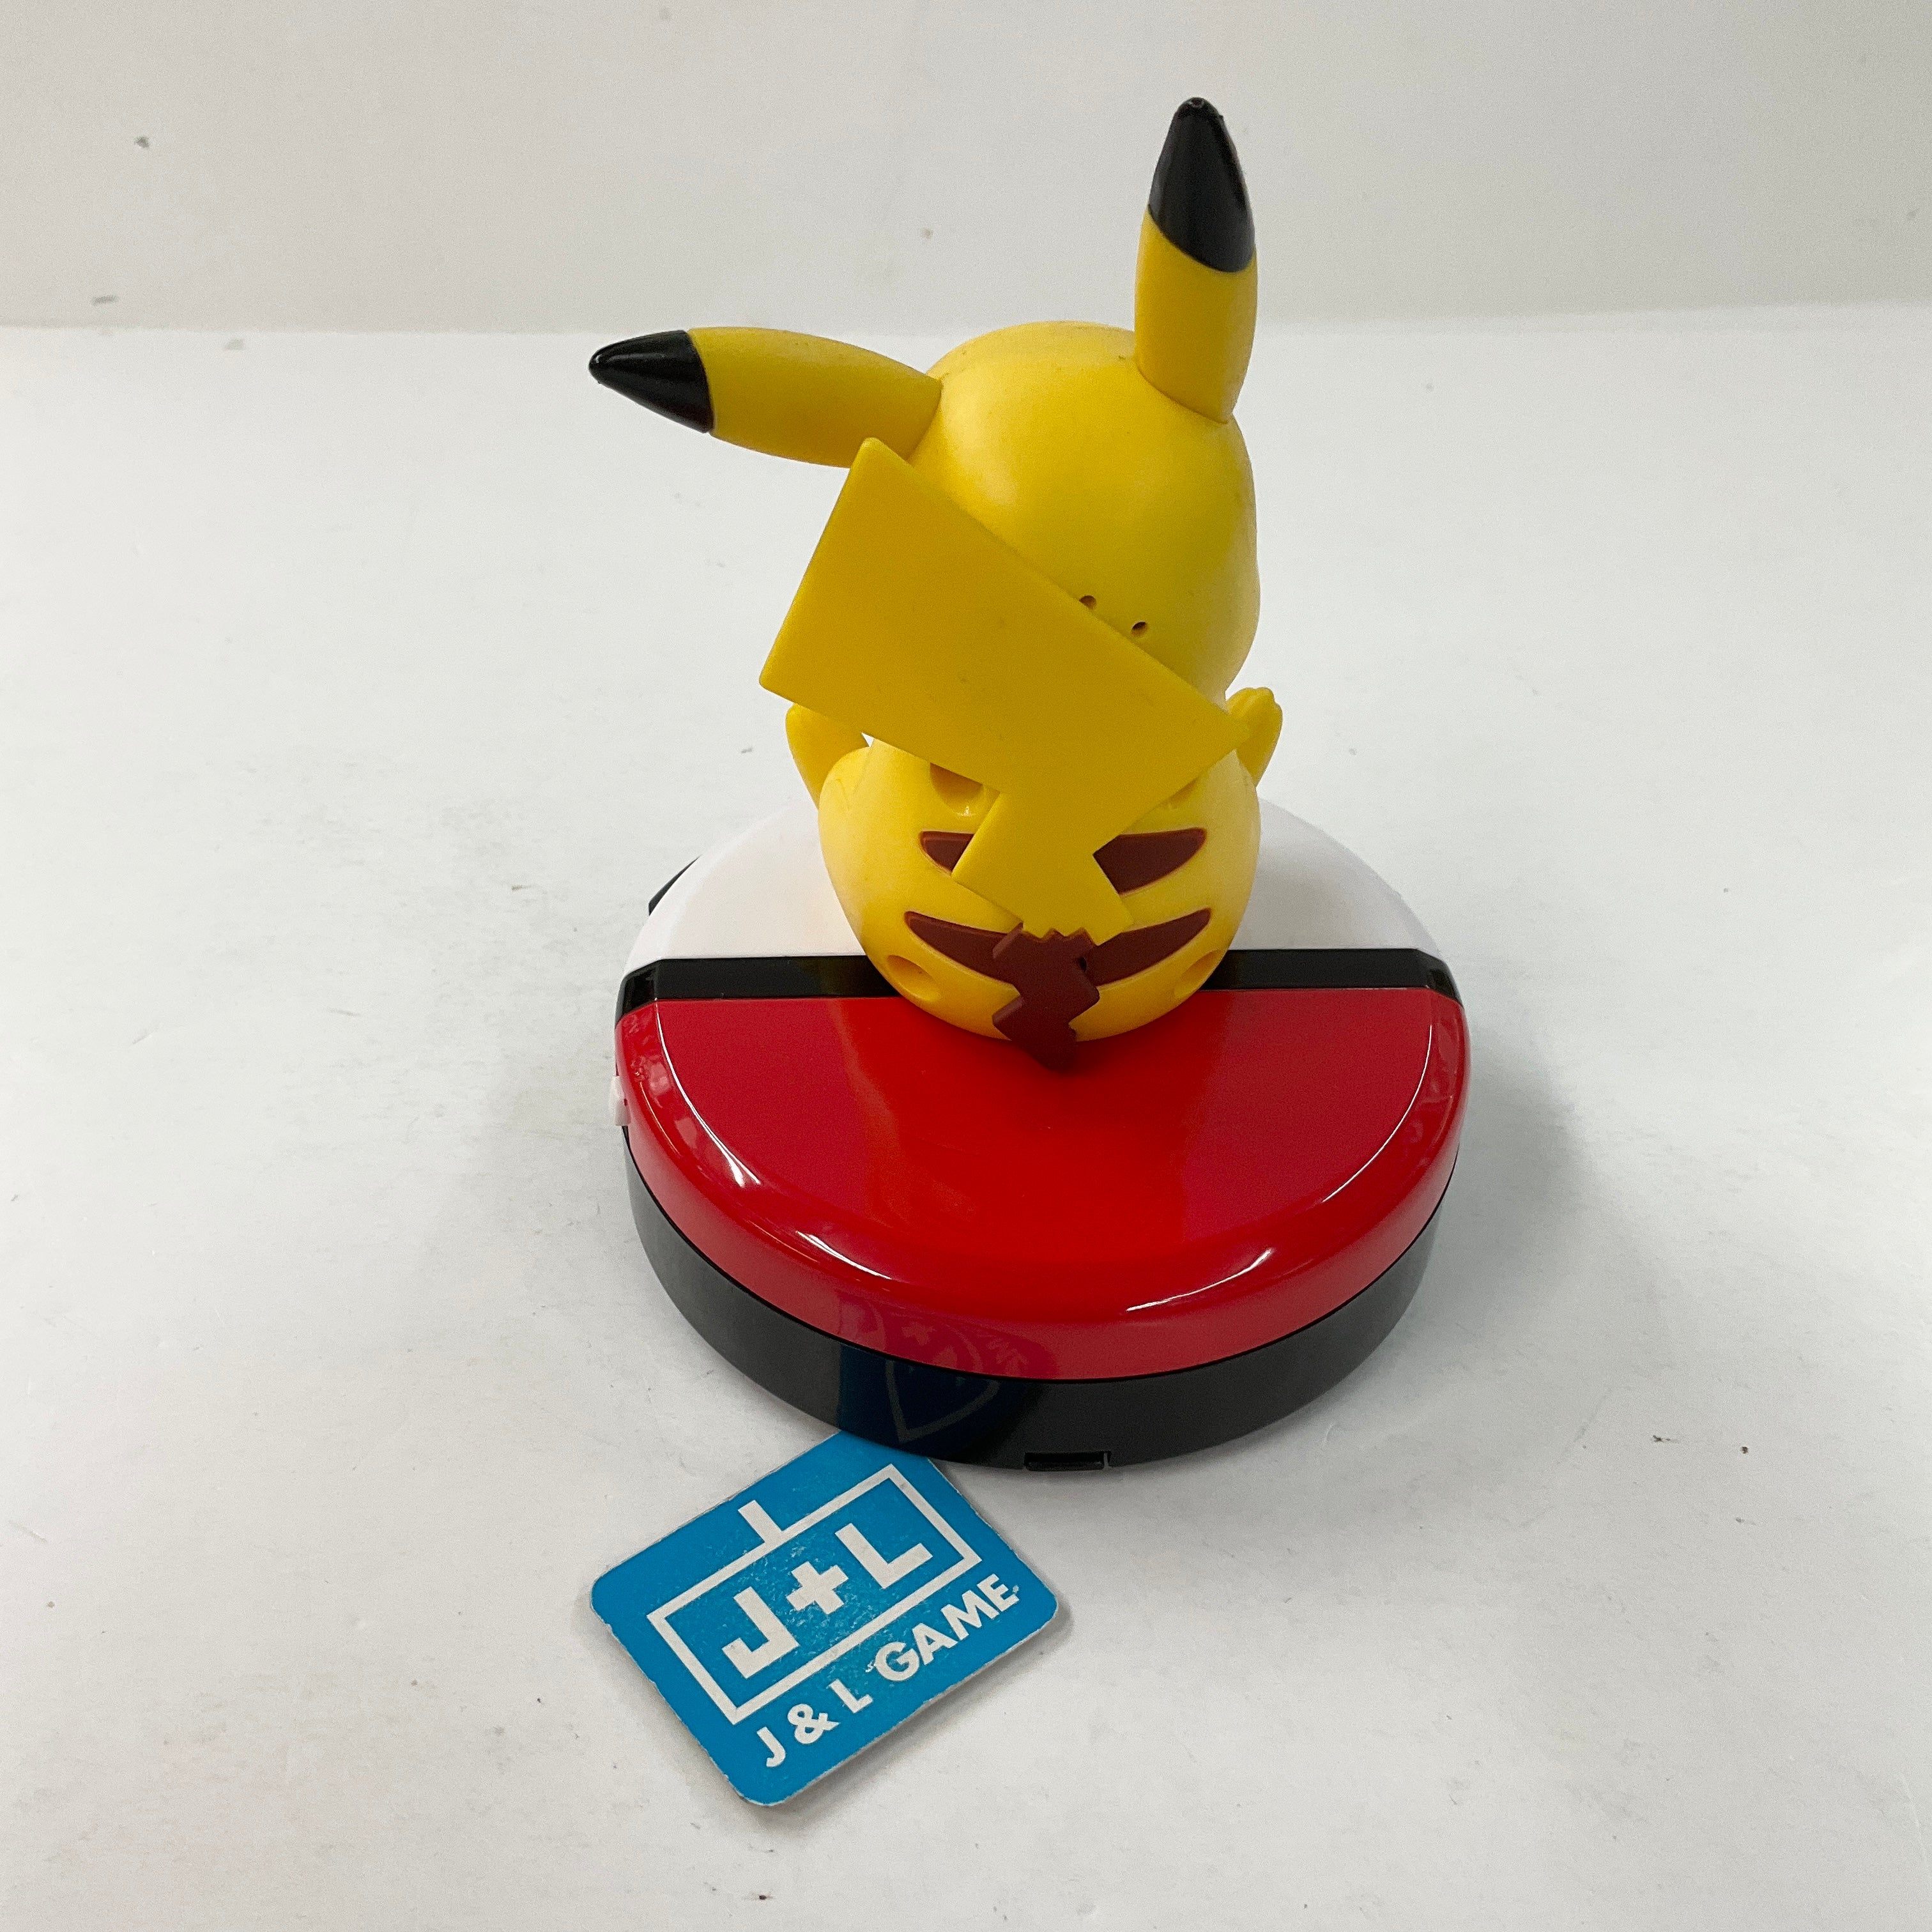 Pocket Monsters Pikachu Run-Run Cleaner Accessories シャイン(Shine)   